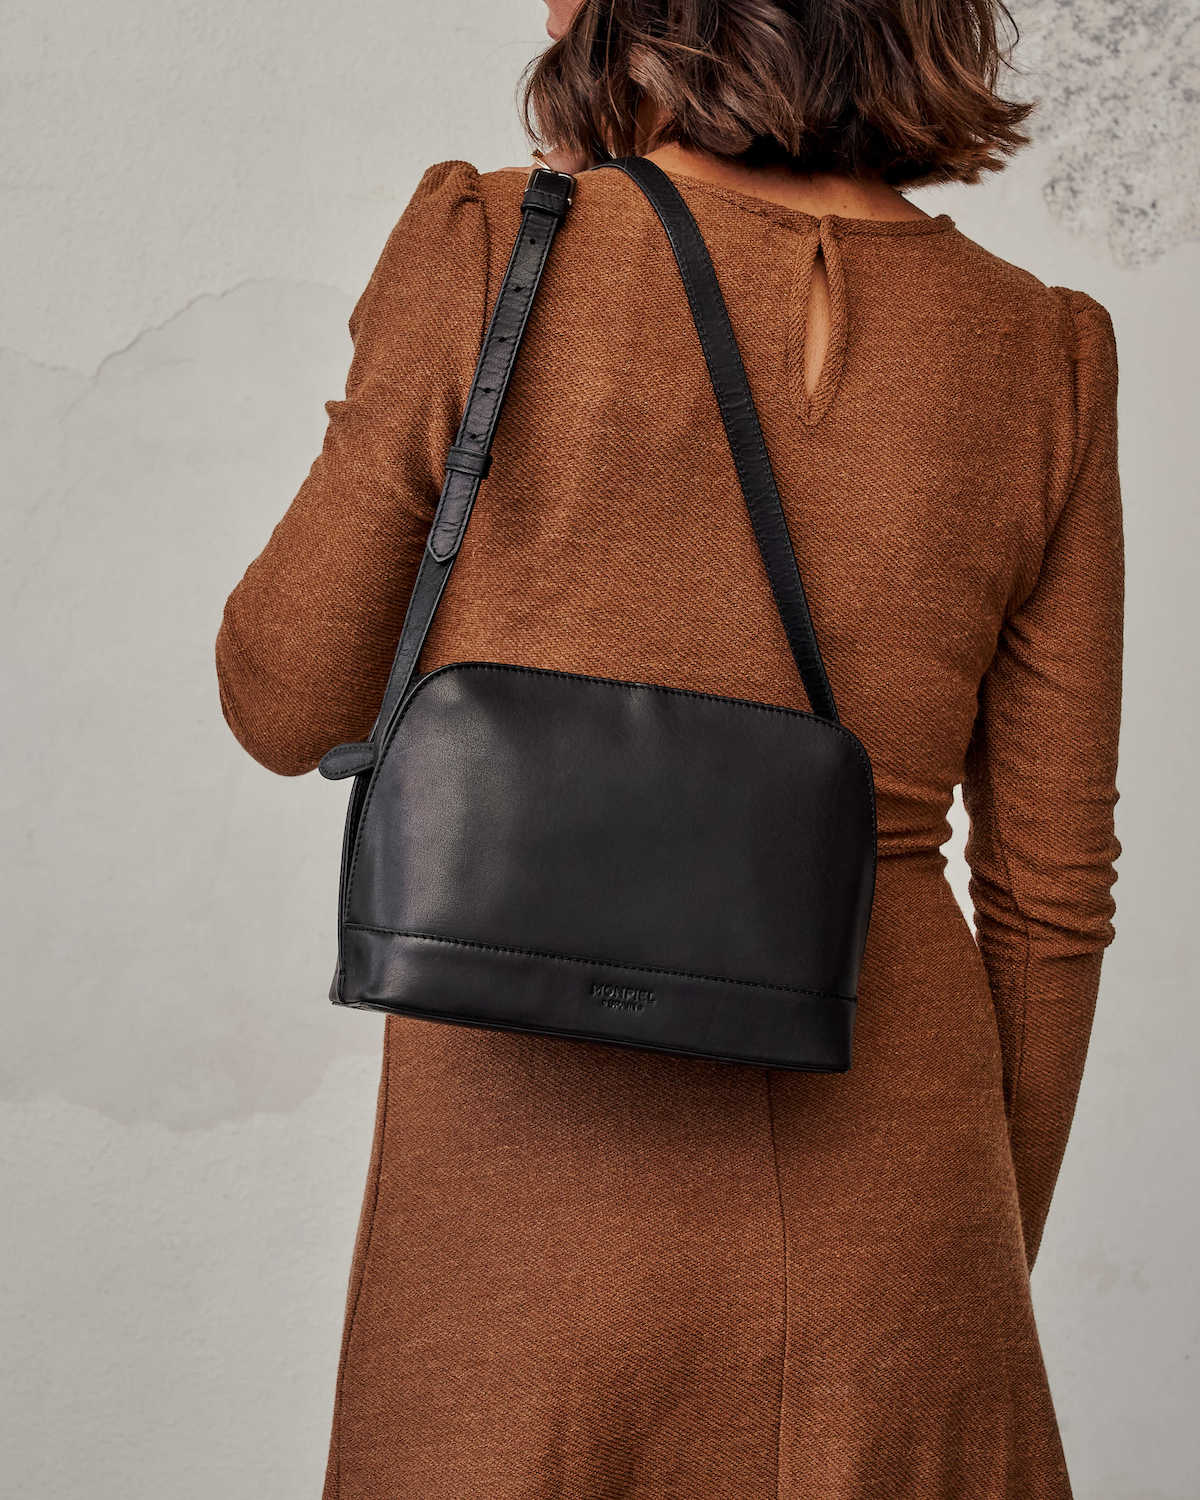 19 Best Everyday Handbags, According to Vogue Editors From Around the Globe  | Vogue